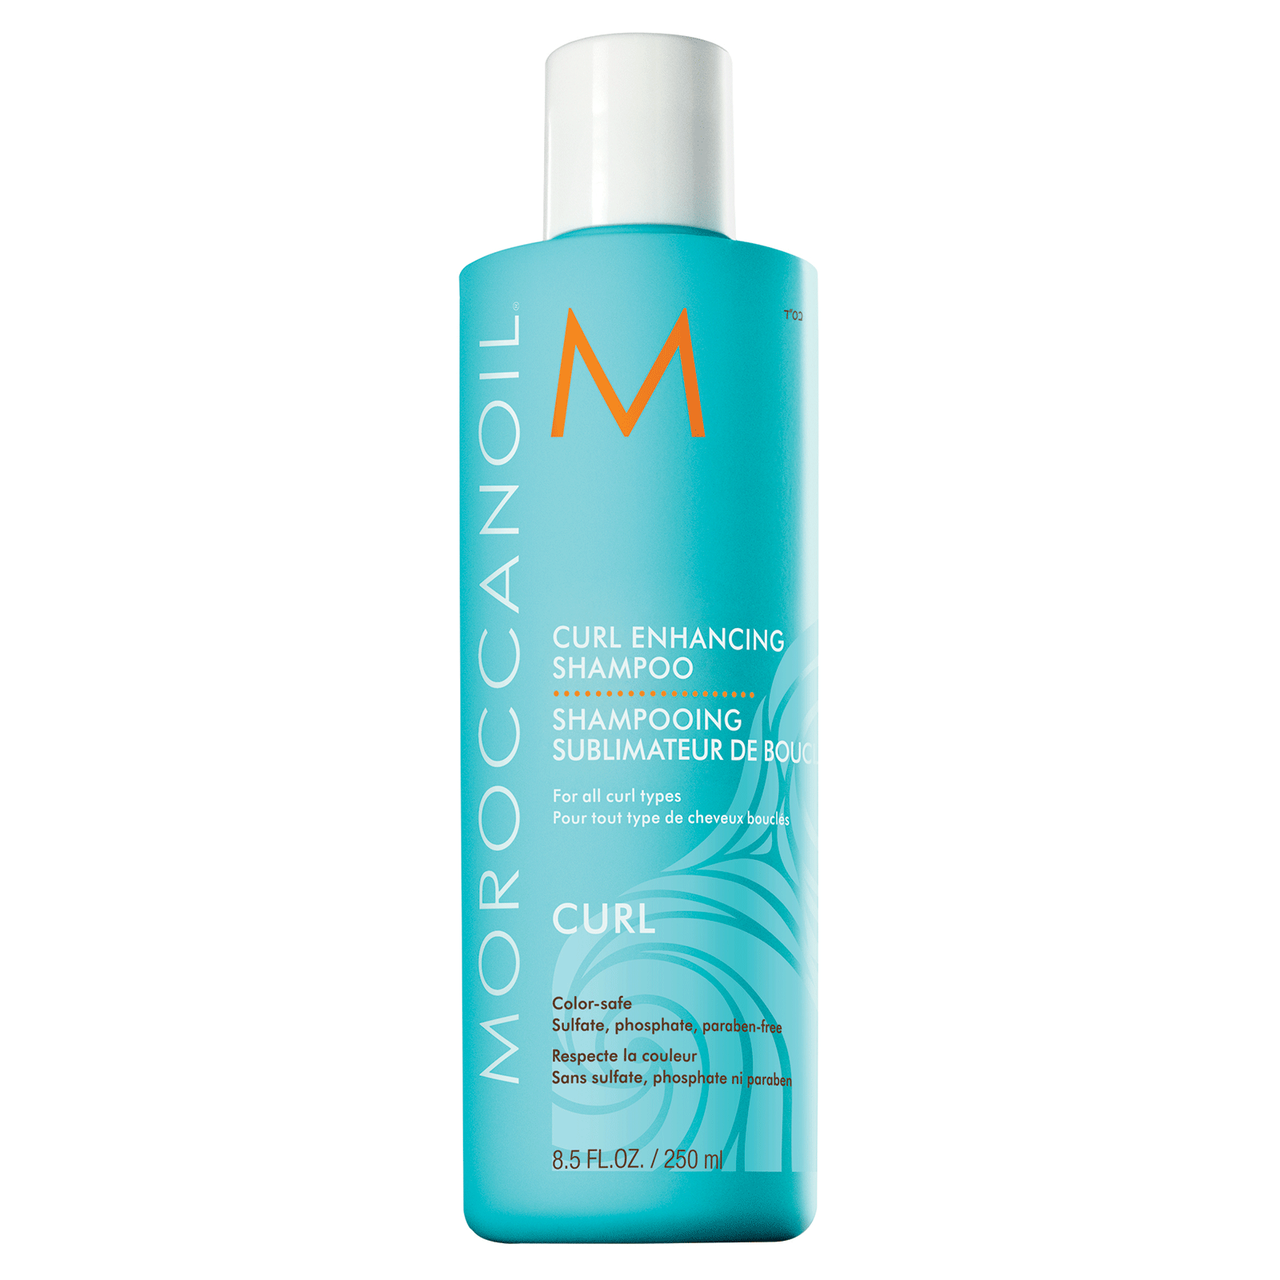 MoroccanOil Curl Enhancing Shampoo 8.5oz - $34.00